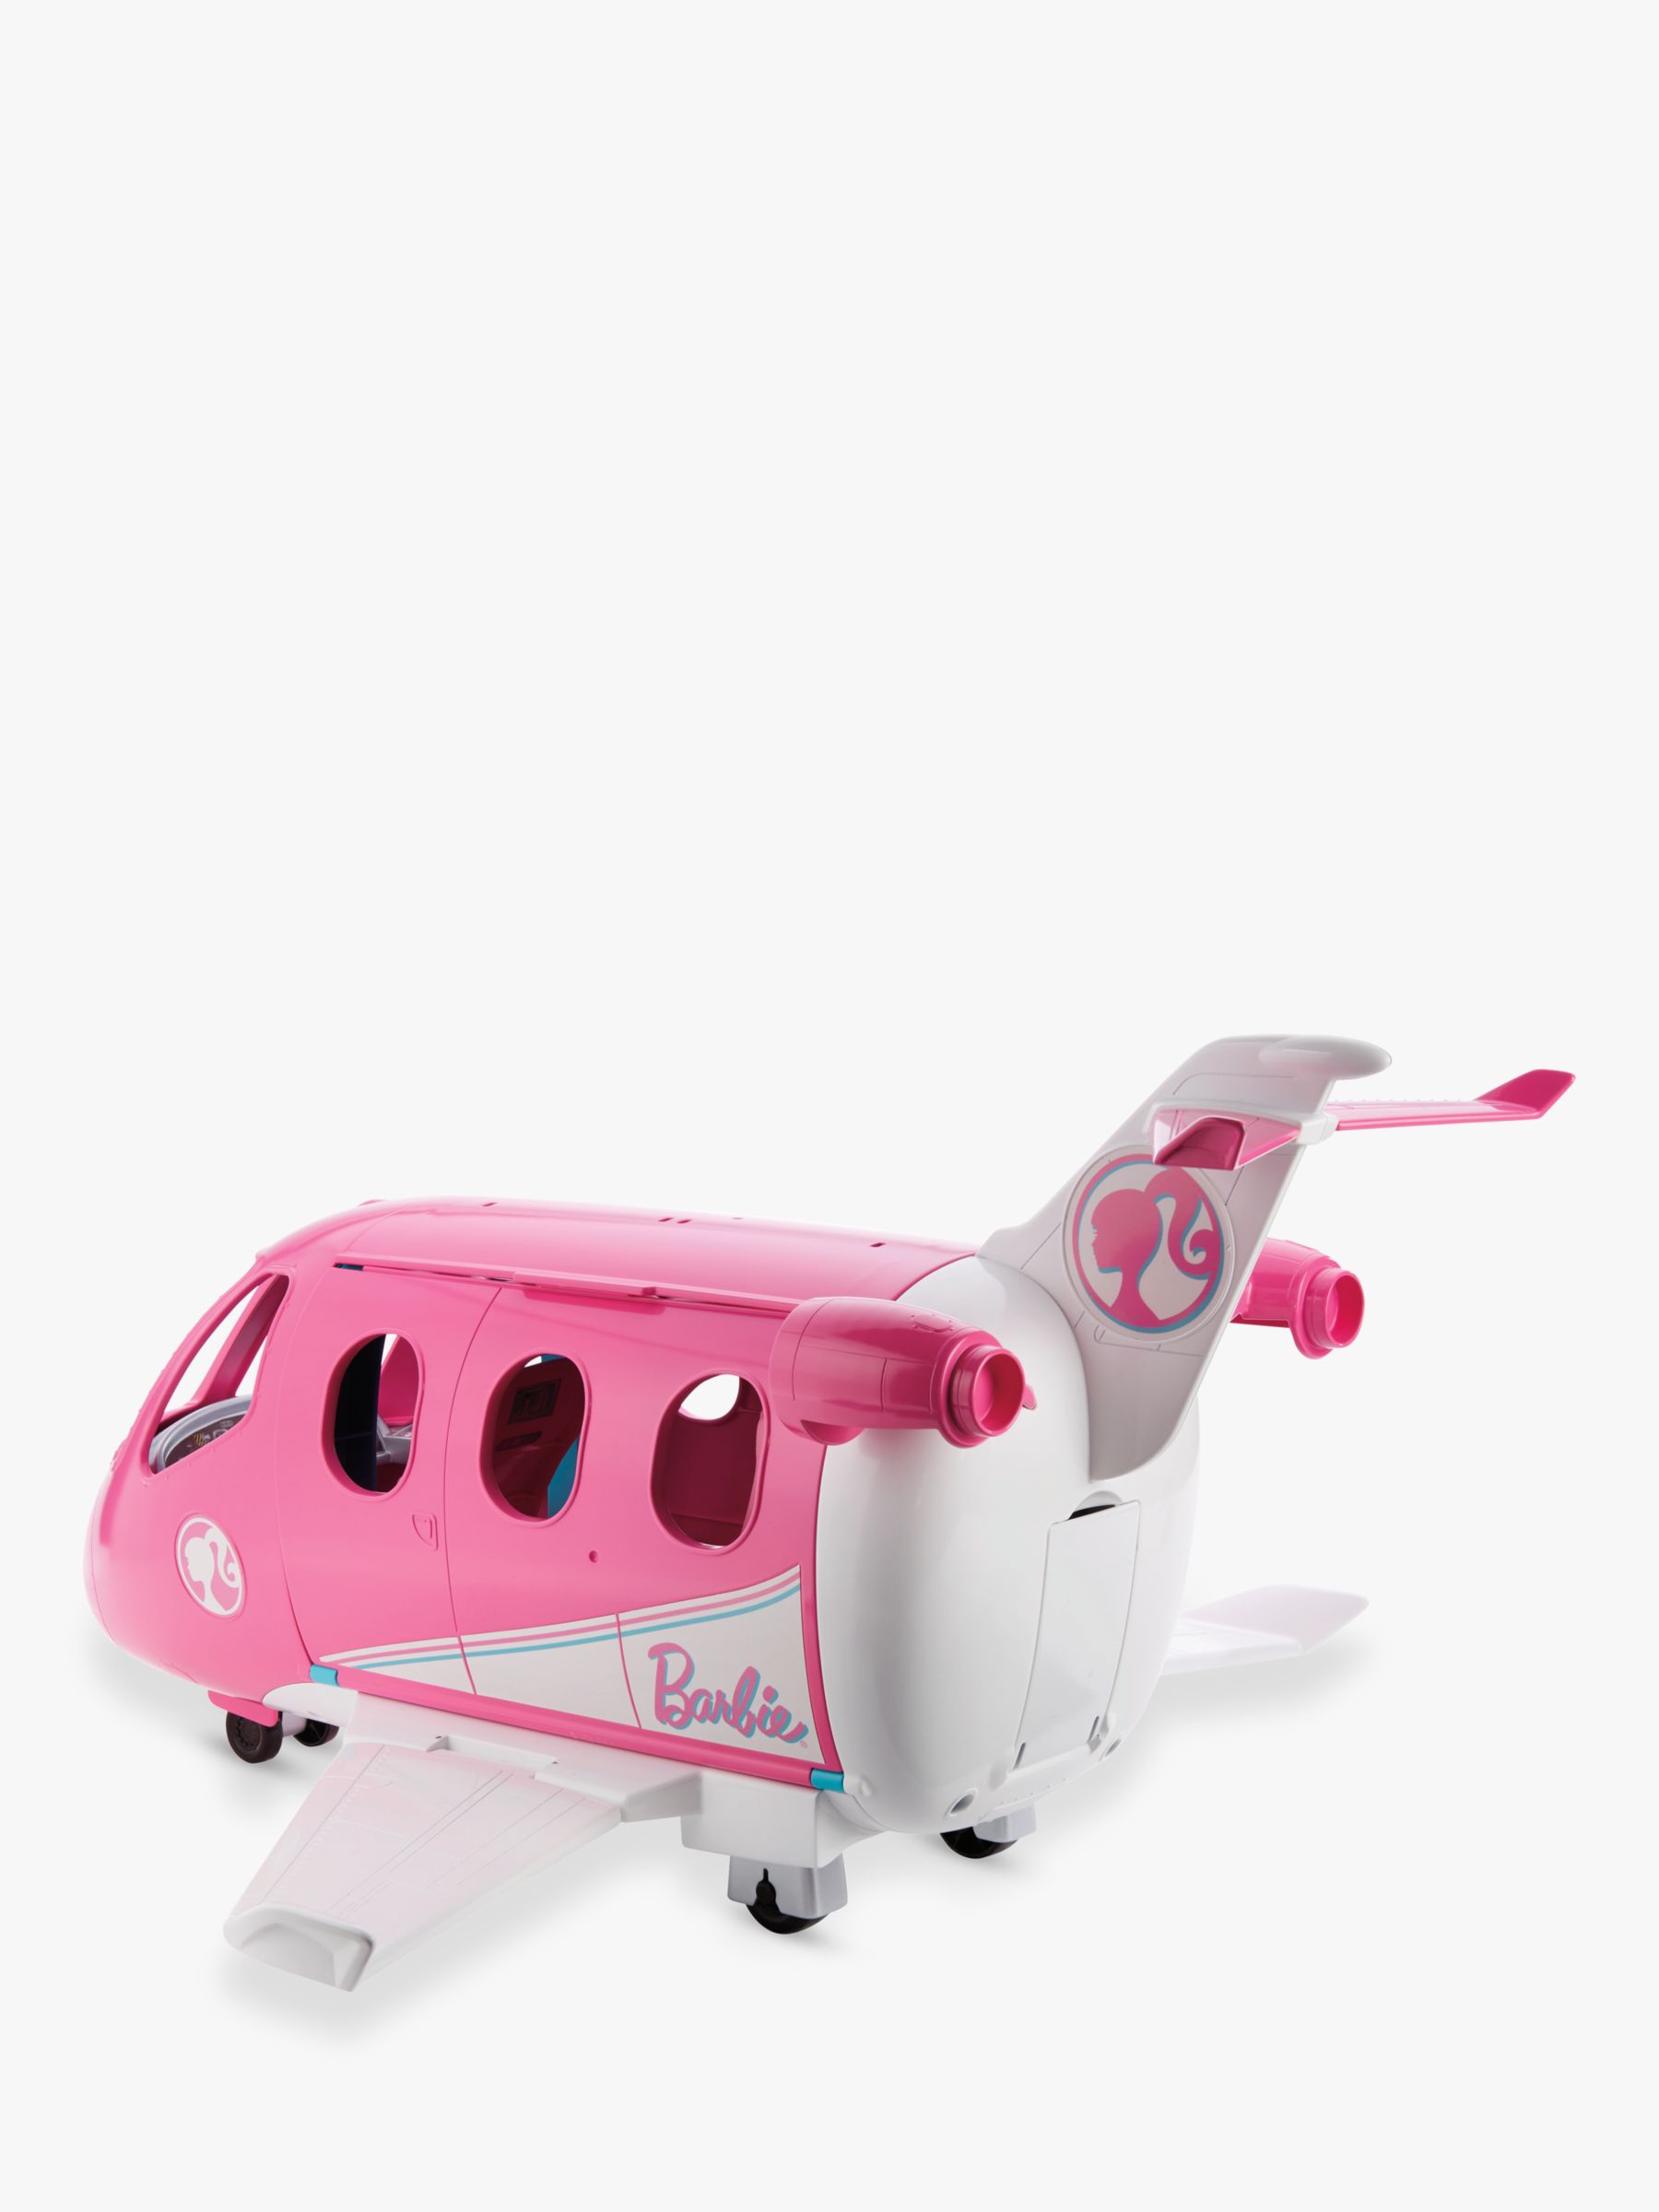 barbie airplane toy